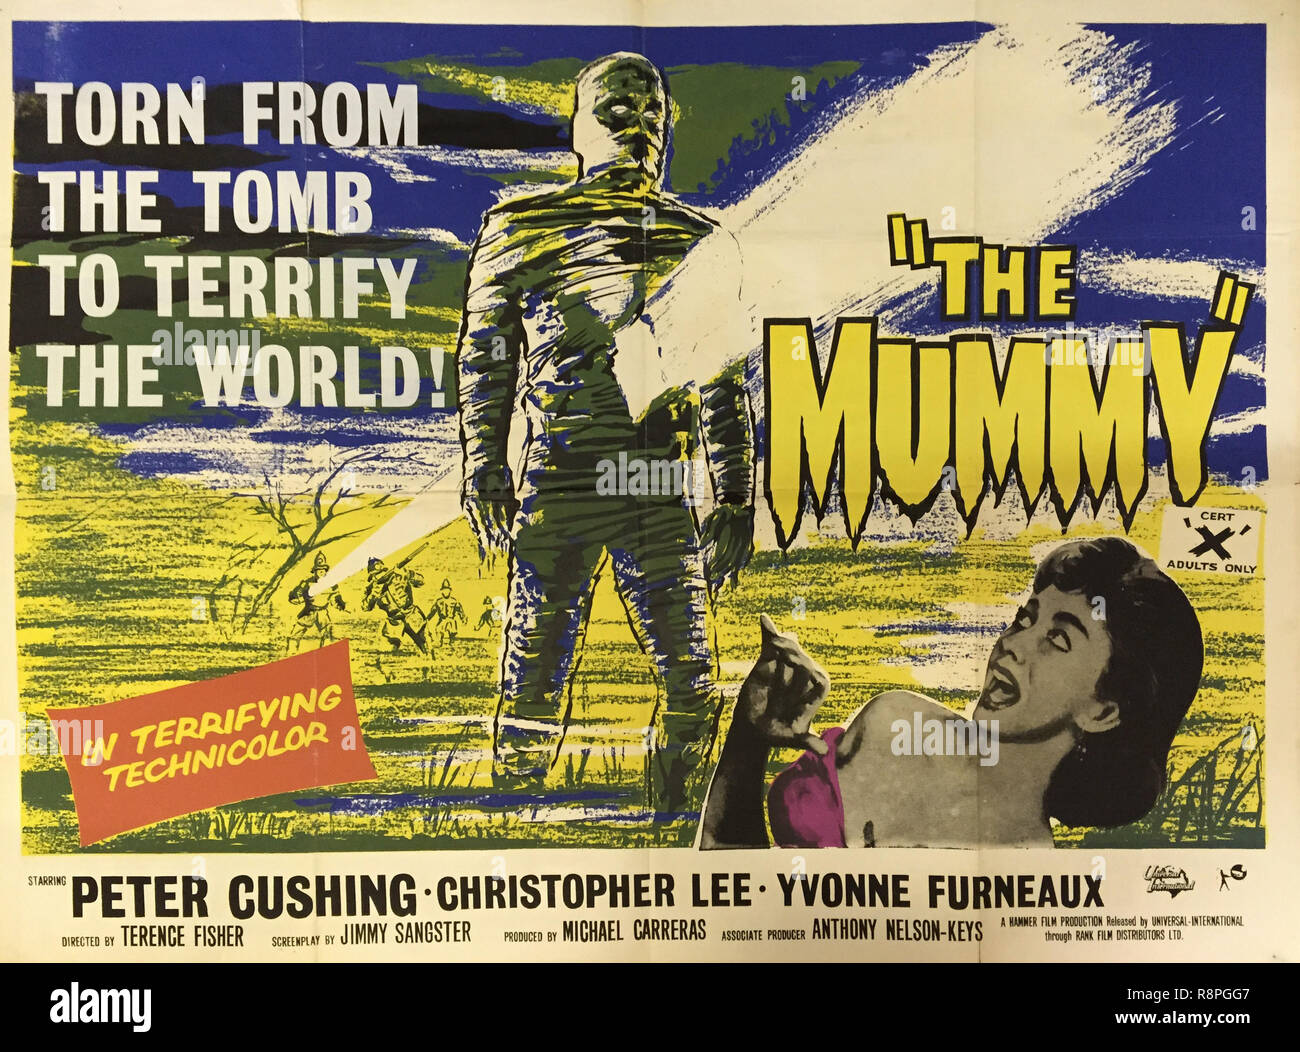 Peter Cushing, Christopher Lee, "The Mummy" (1959) Universal-International  Lobby Card File Reference # 33635 544THA Stock Photo - Alamy